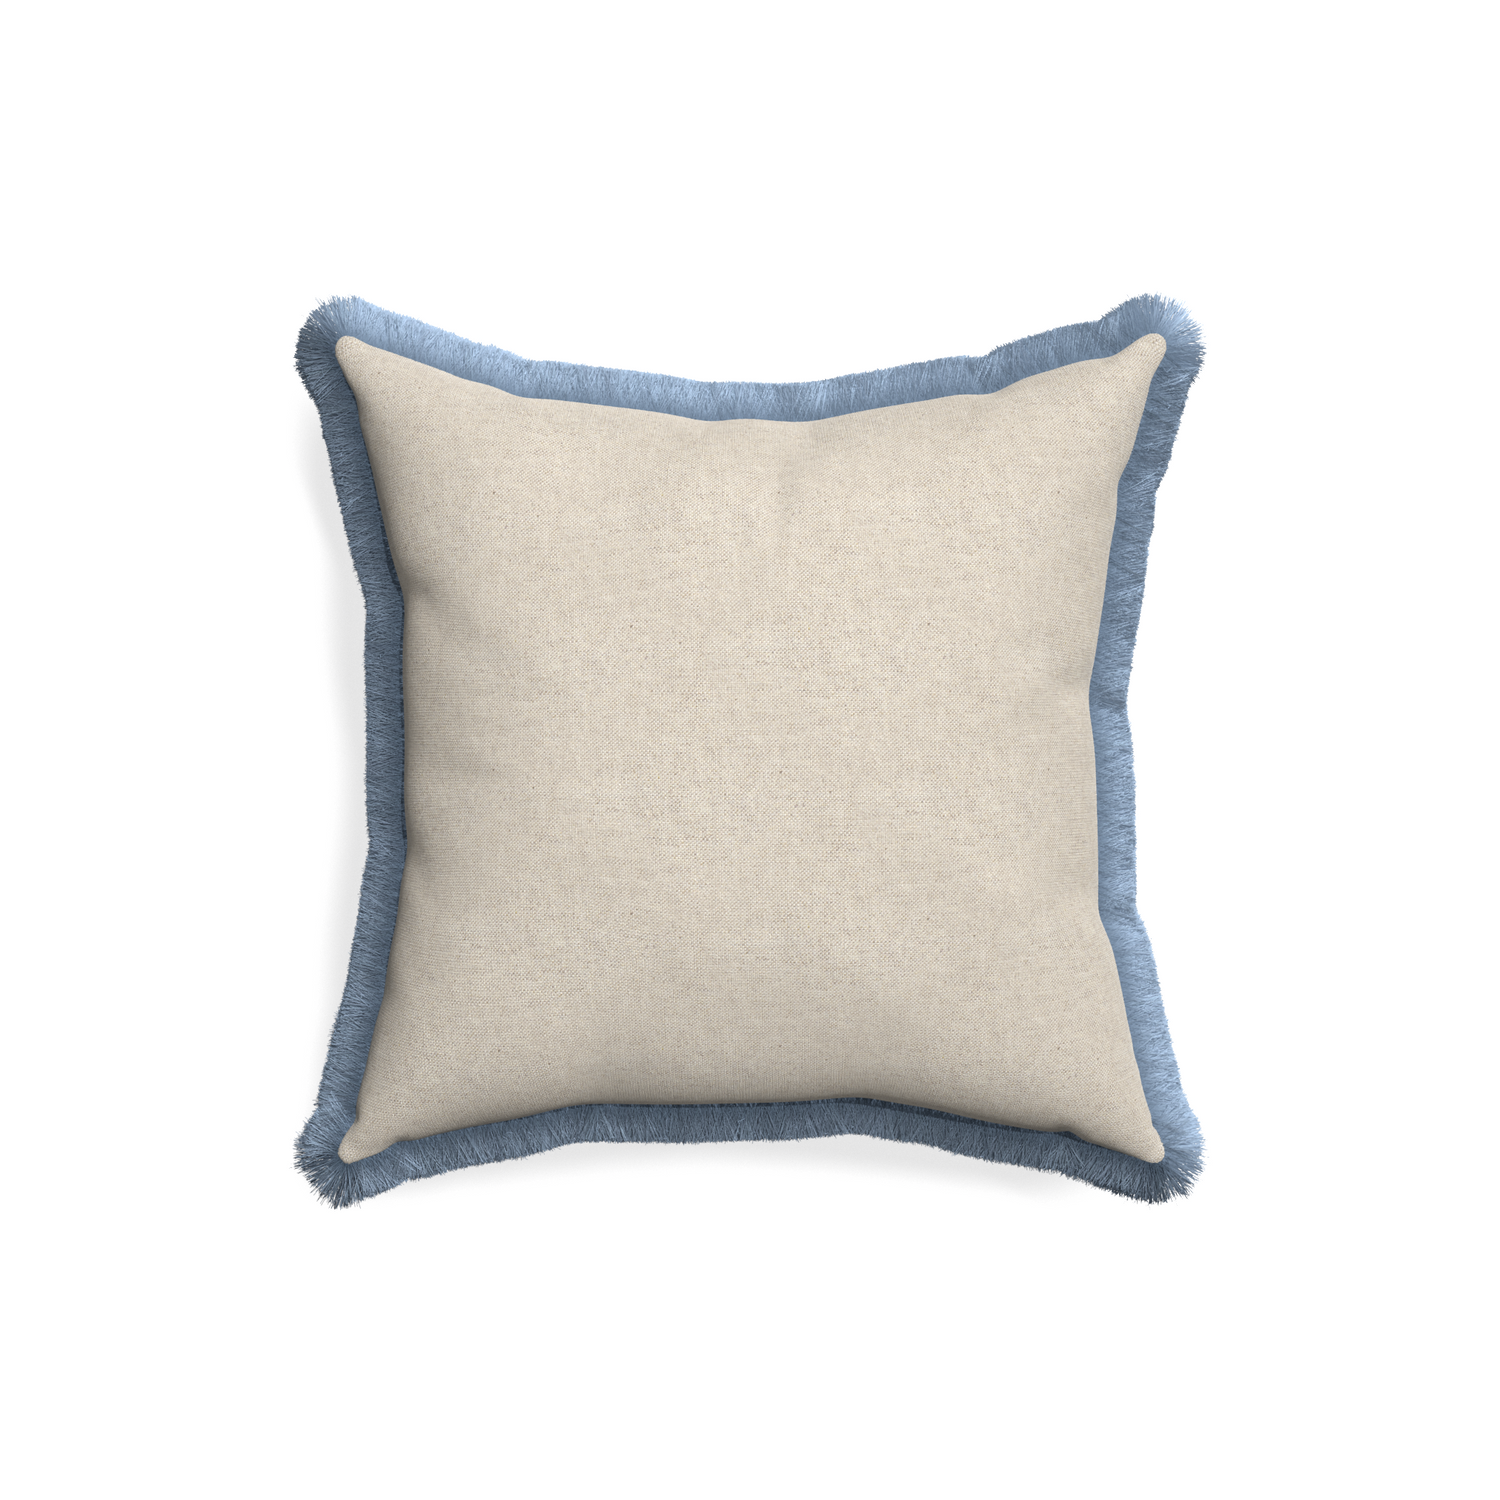 18-square oat custom pillow with sky fringe on white background